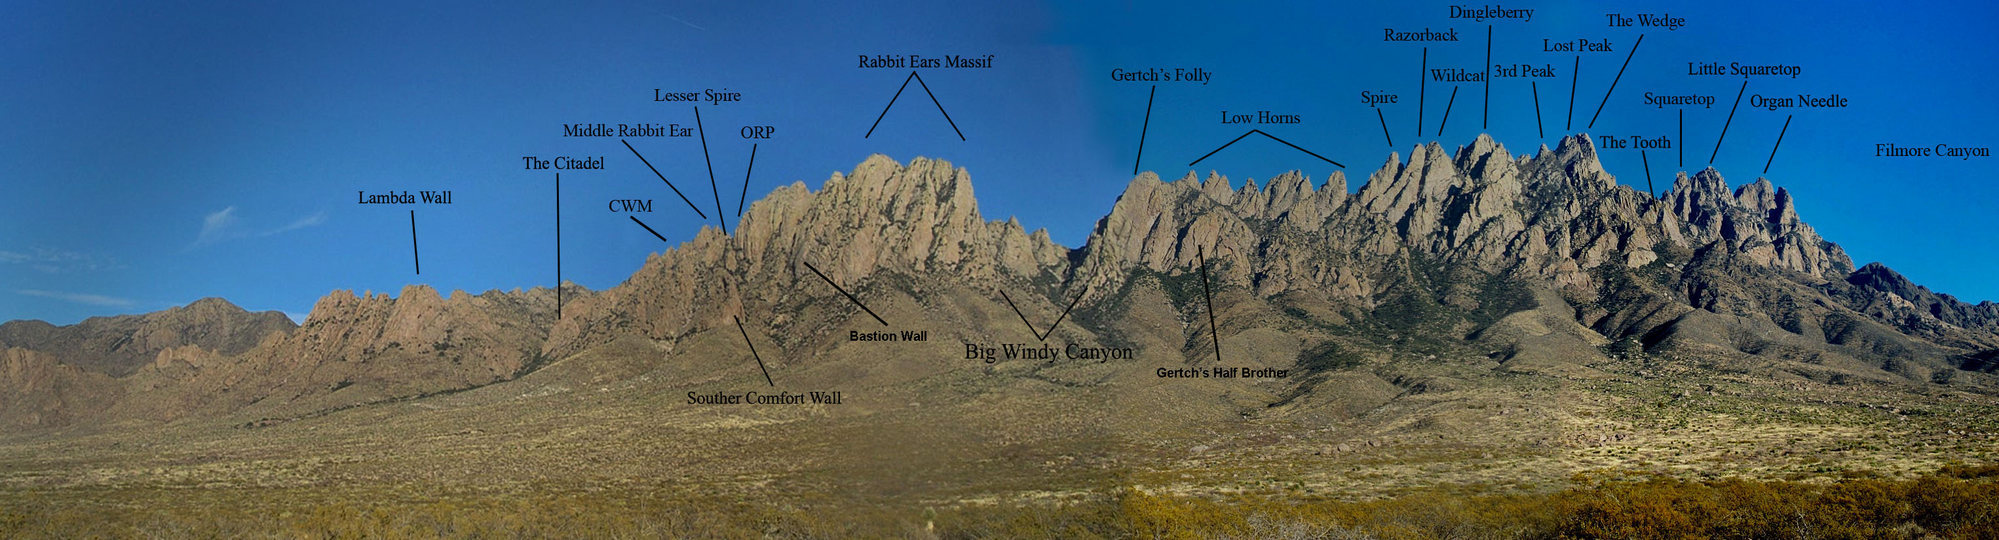 Organ Mountains Mexico Cruces Las Peak Climbing Locations Area.